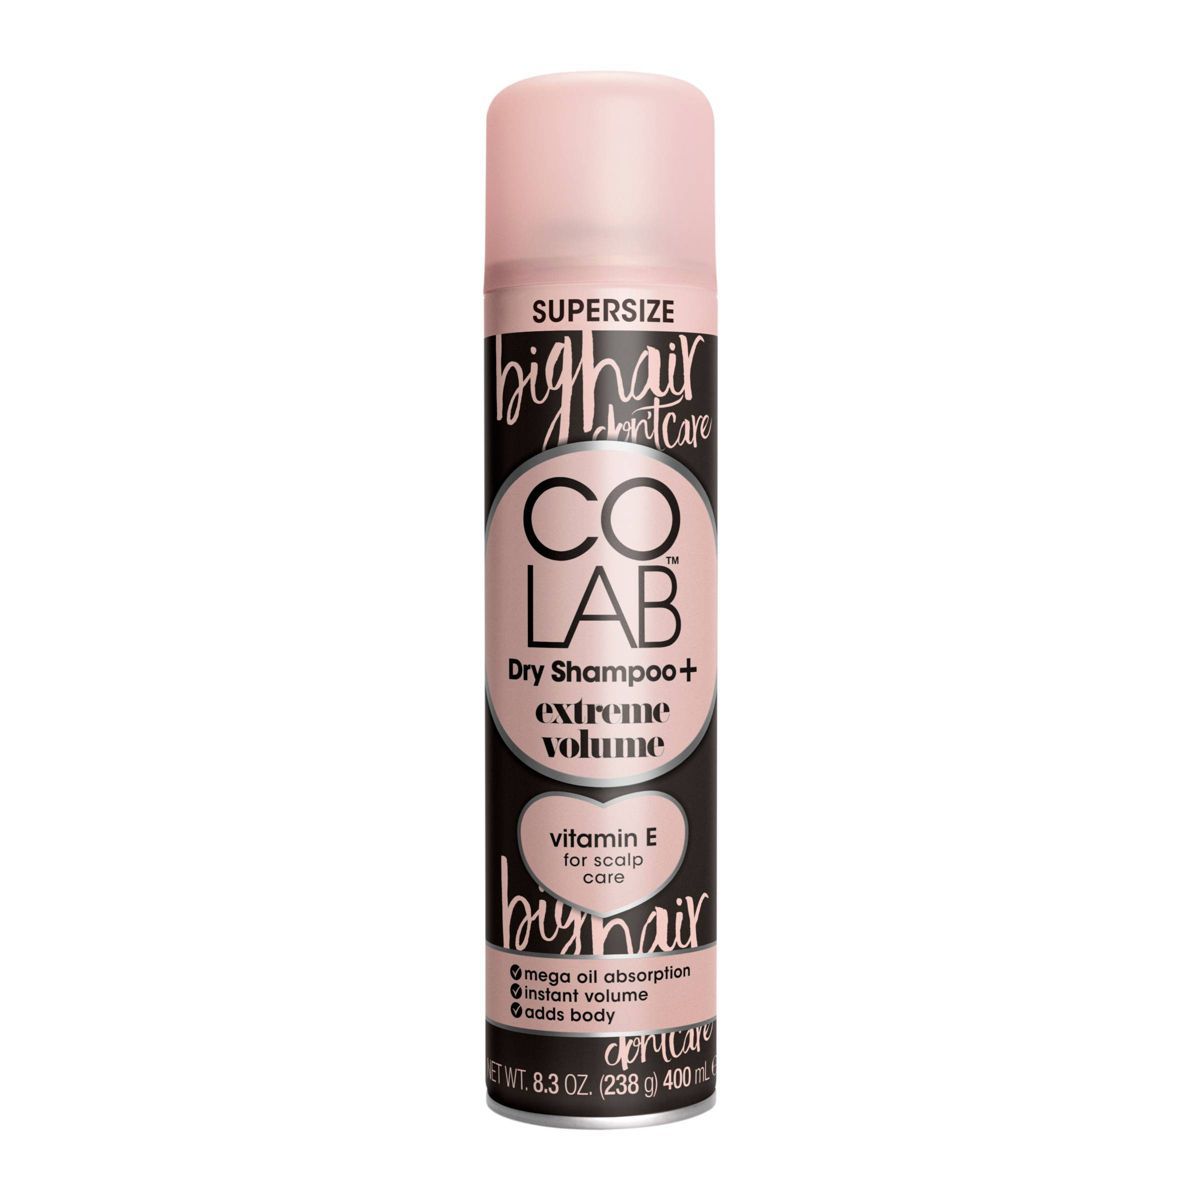 COLAB Extreme Volume Supersize Dry Shampoo - 8.3oz | Target